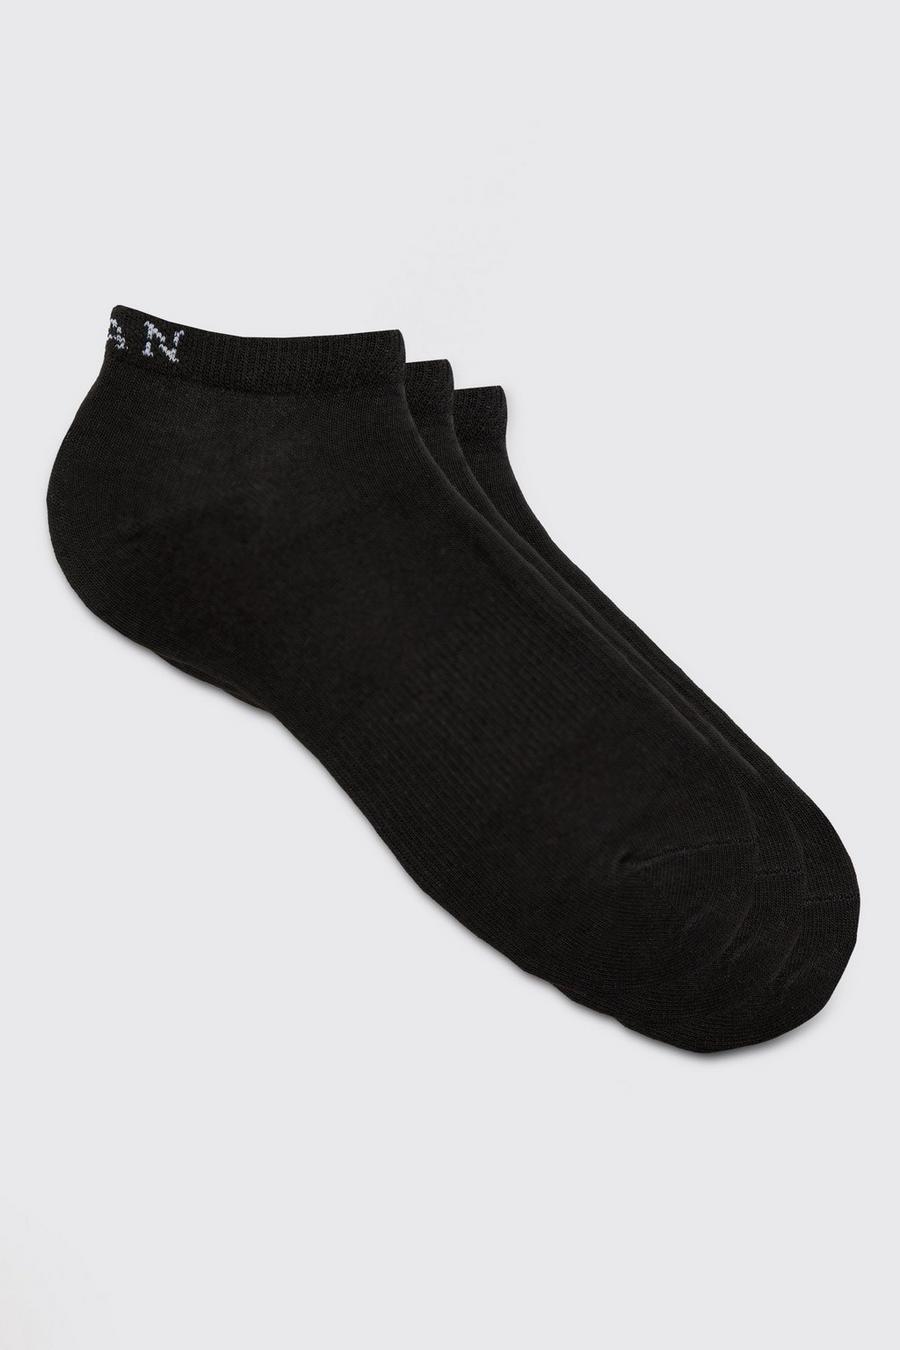 Pack de 3 pares de calcetines MAN deportivos, Black